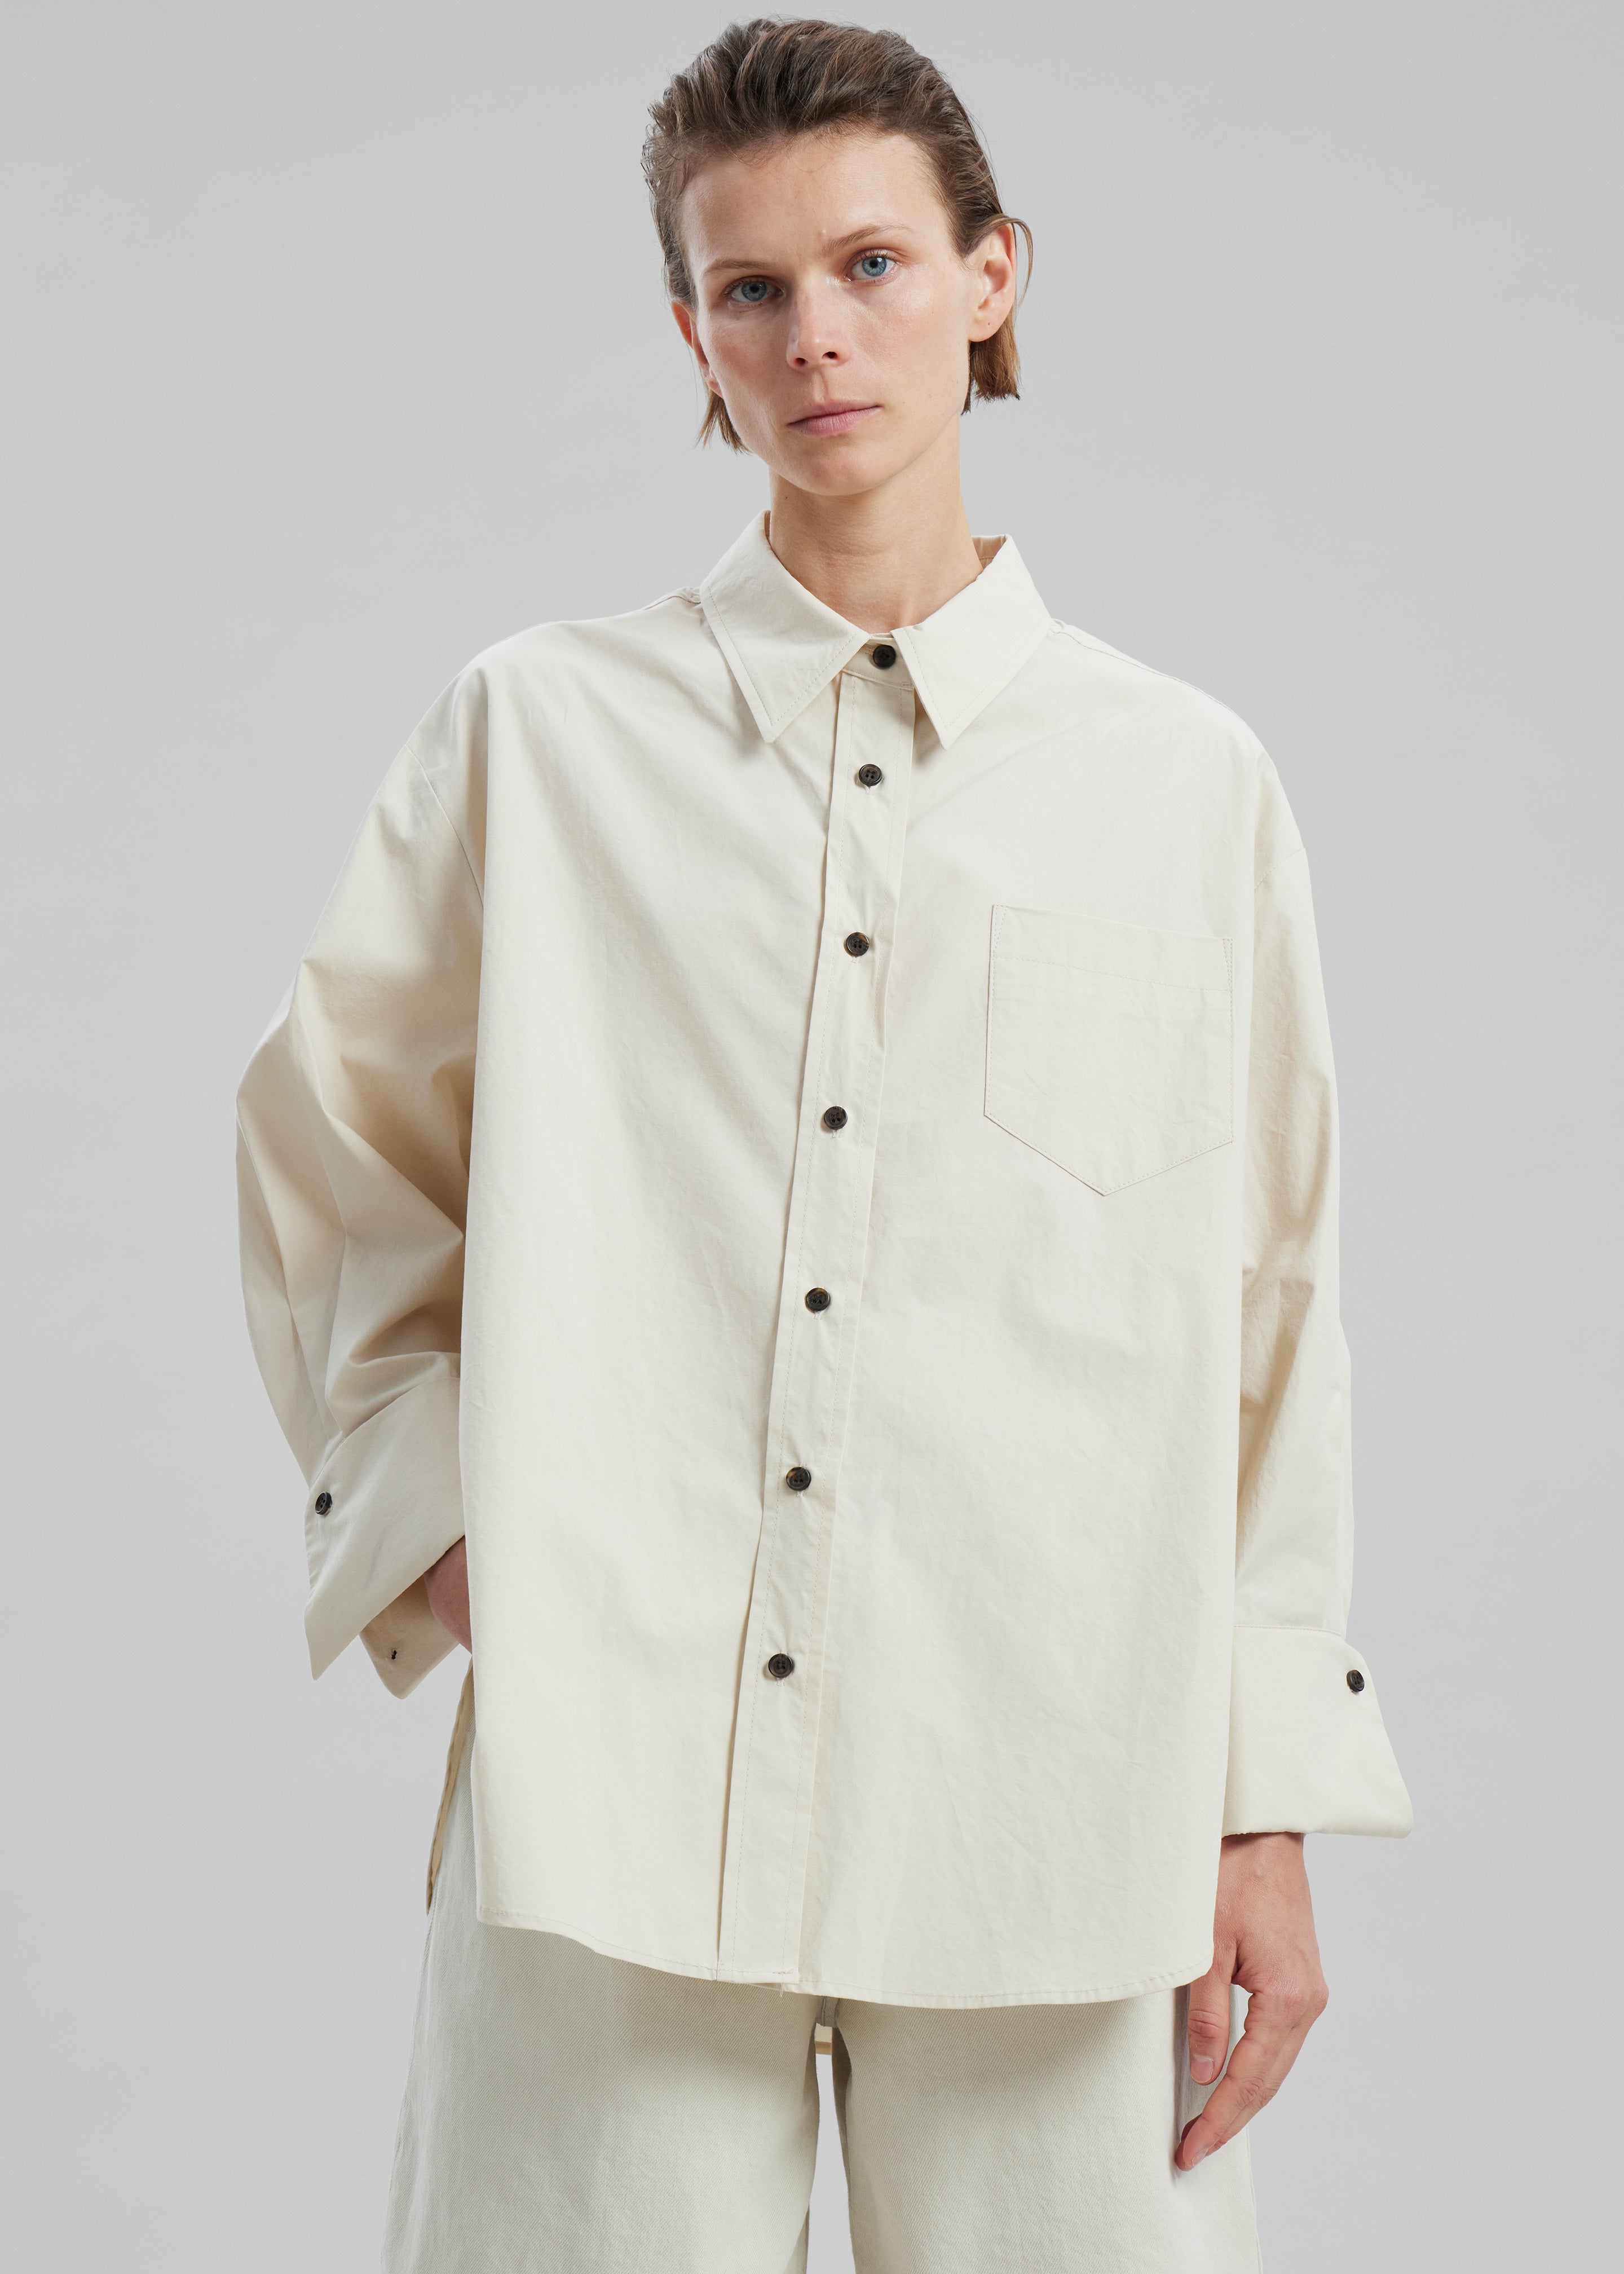 Zuri Boxy Button Up Shirt - Cream - 7